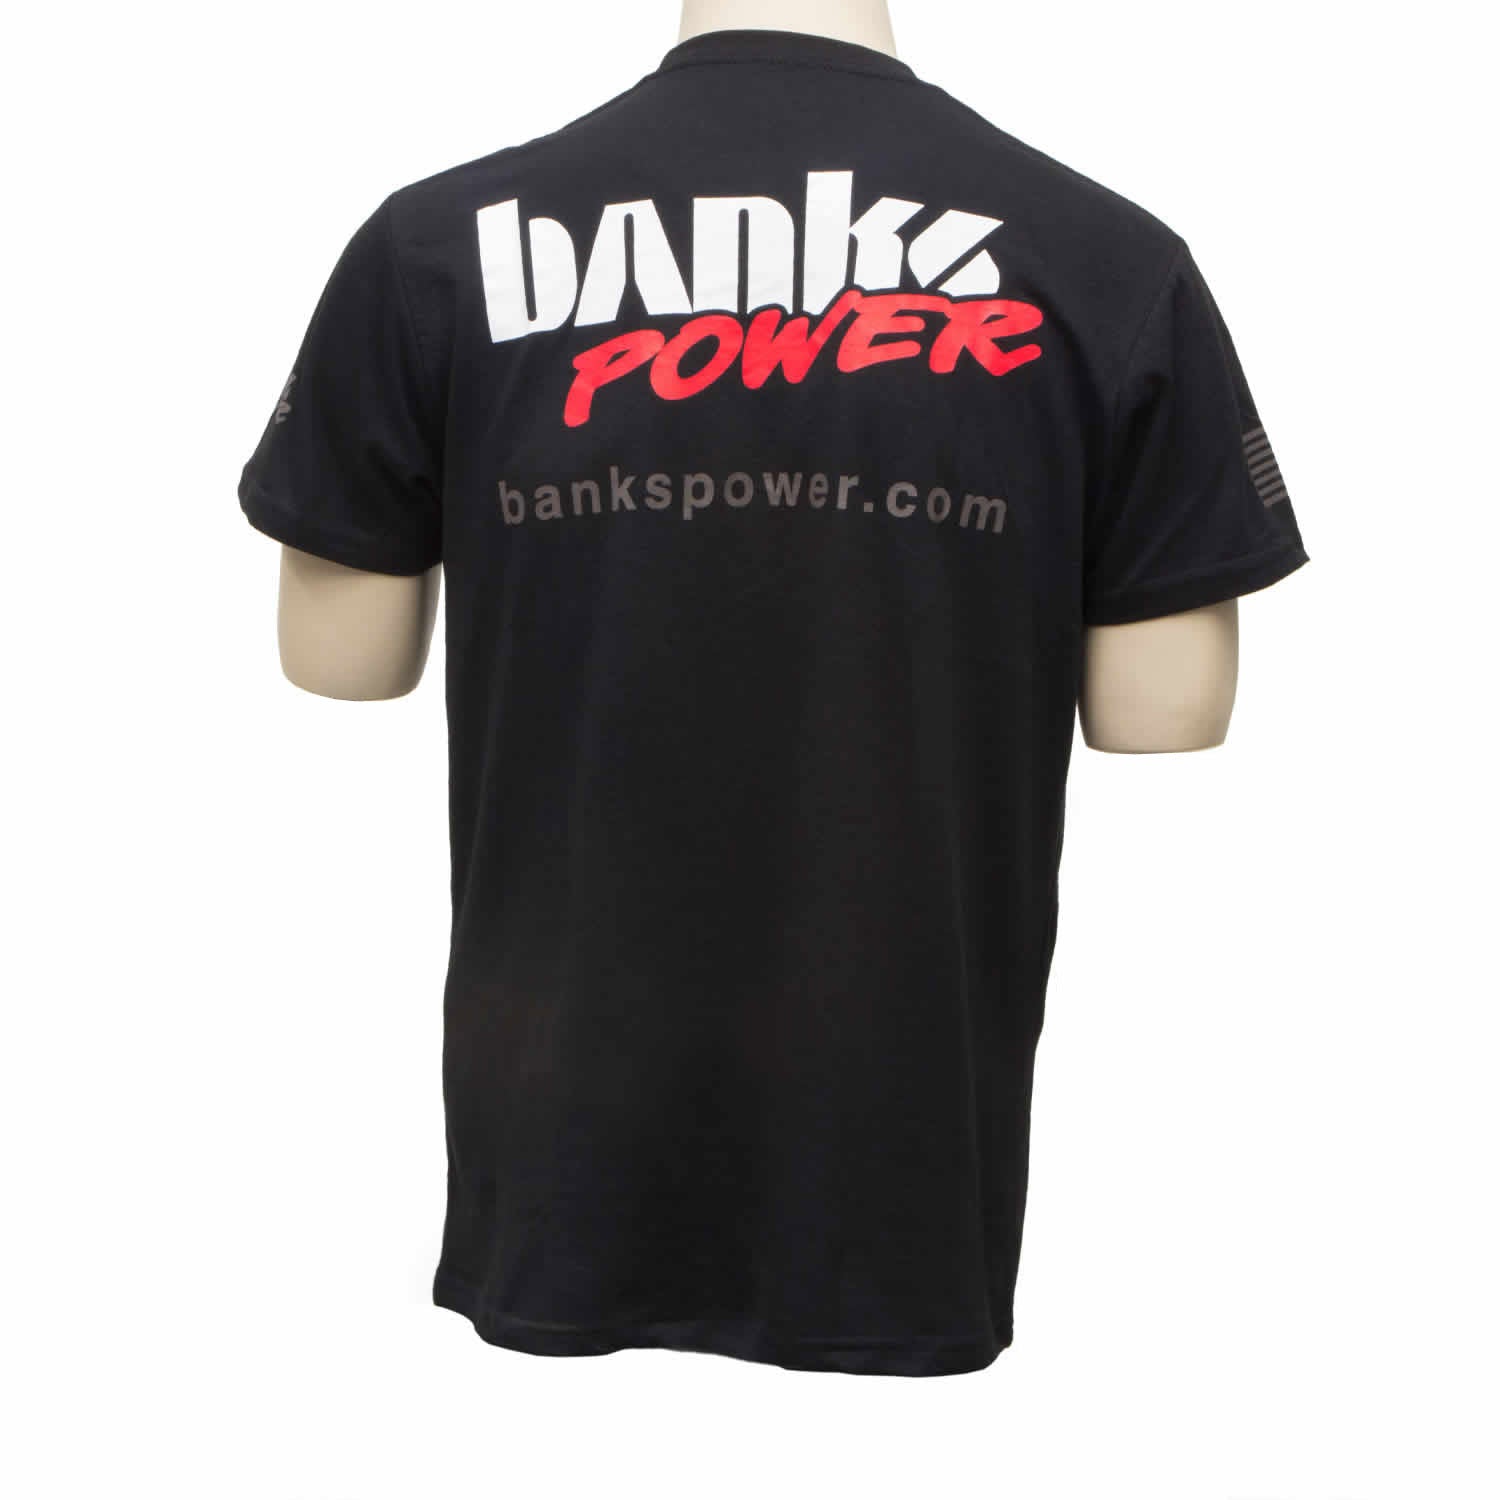 Tire Tread T-Shirt Medium Black Banks Power